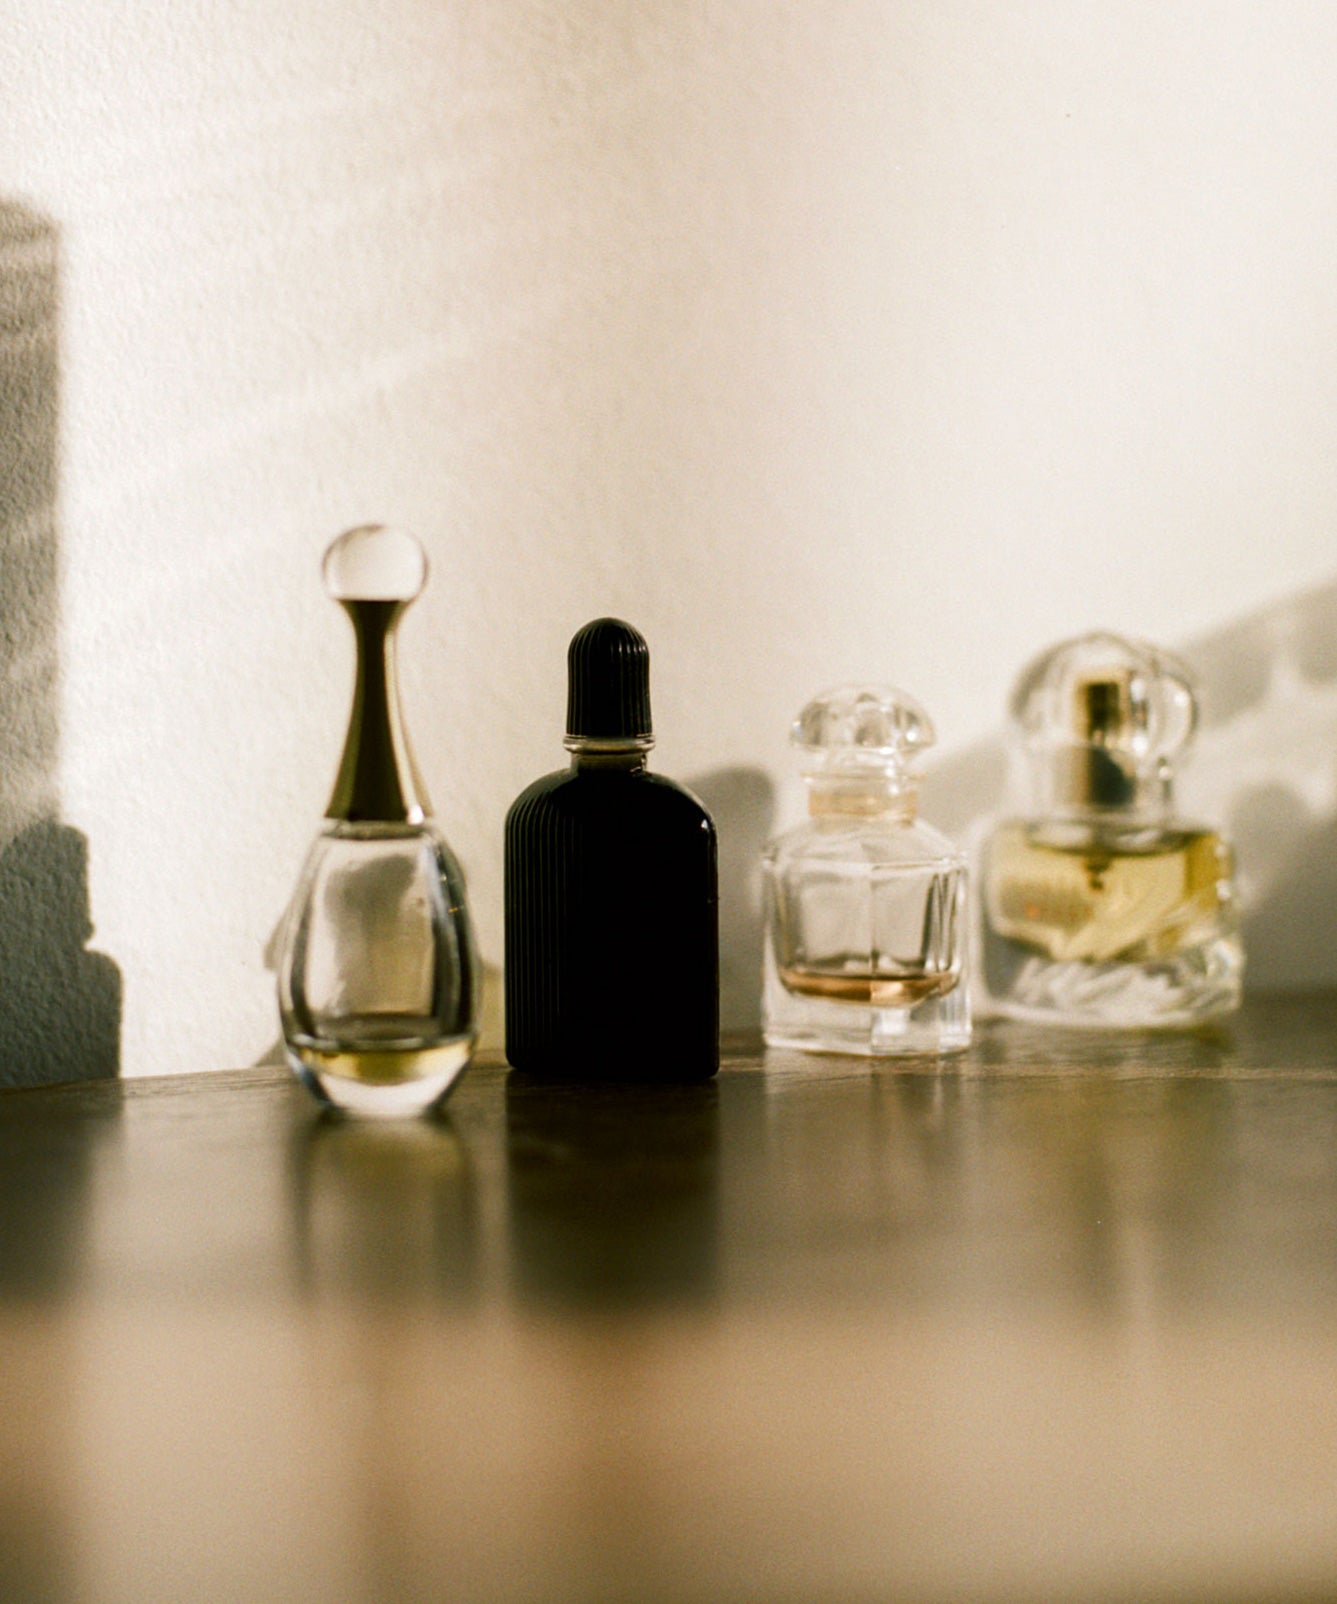 LOUIS VUITTON SPELL ON YOU Eau de Parfum for Men & Women, Brand New  Sealed